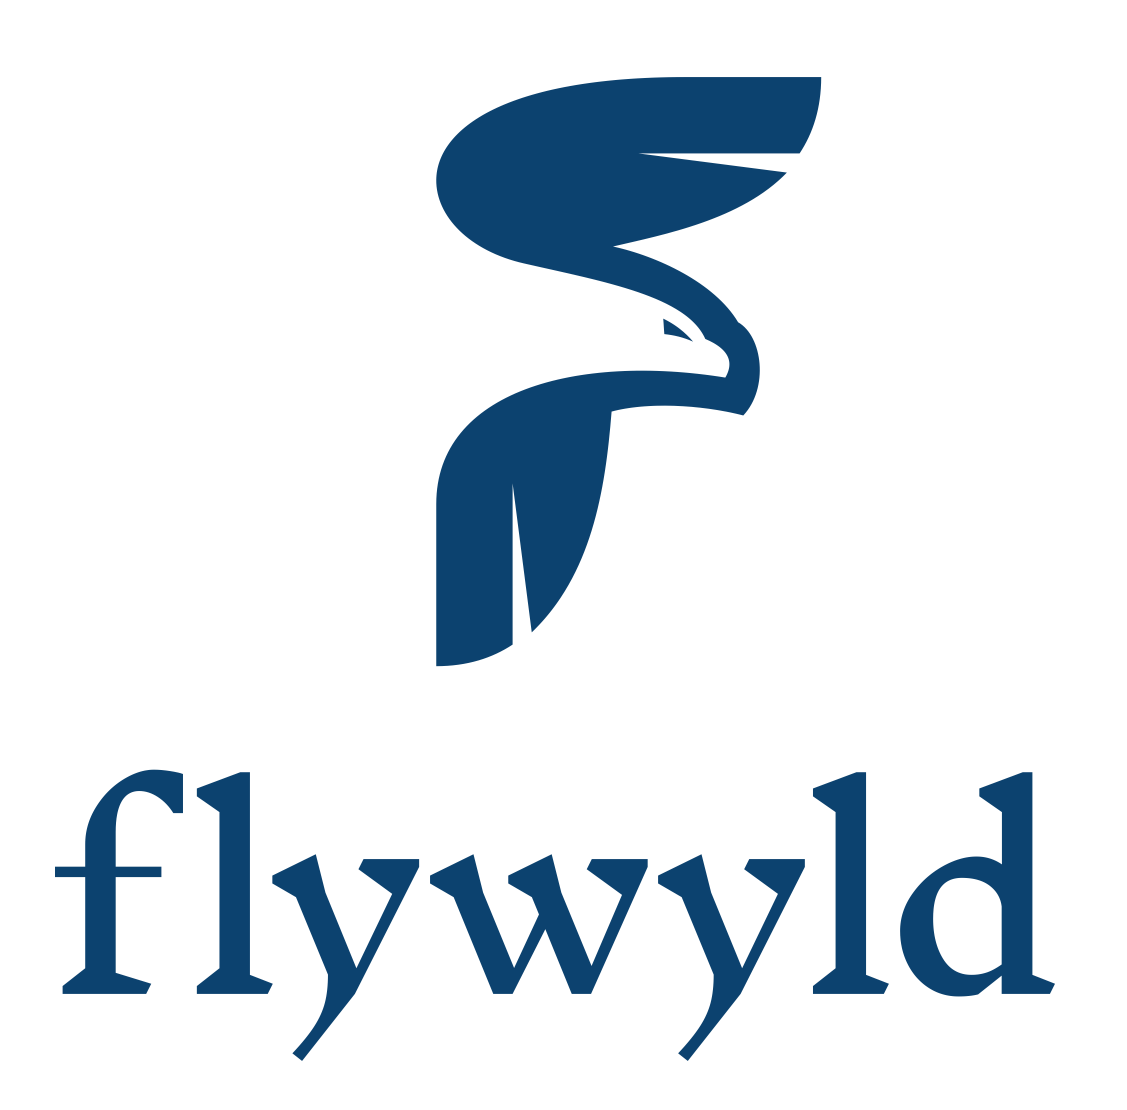 Flywyld Aviation